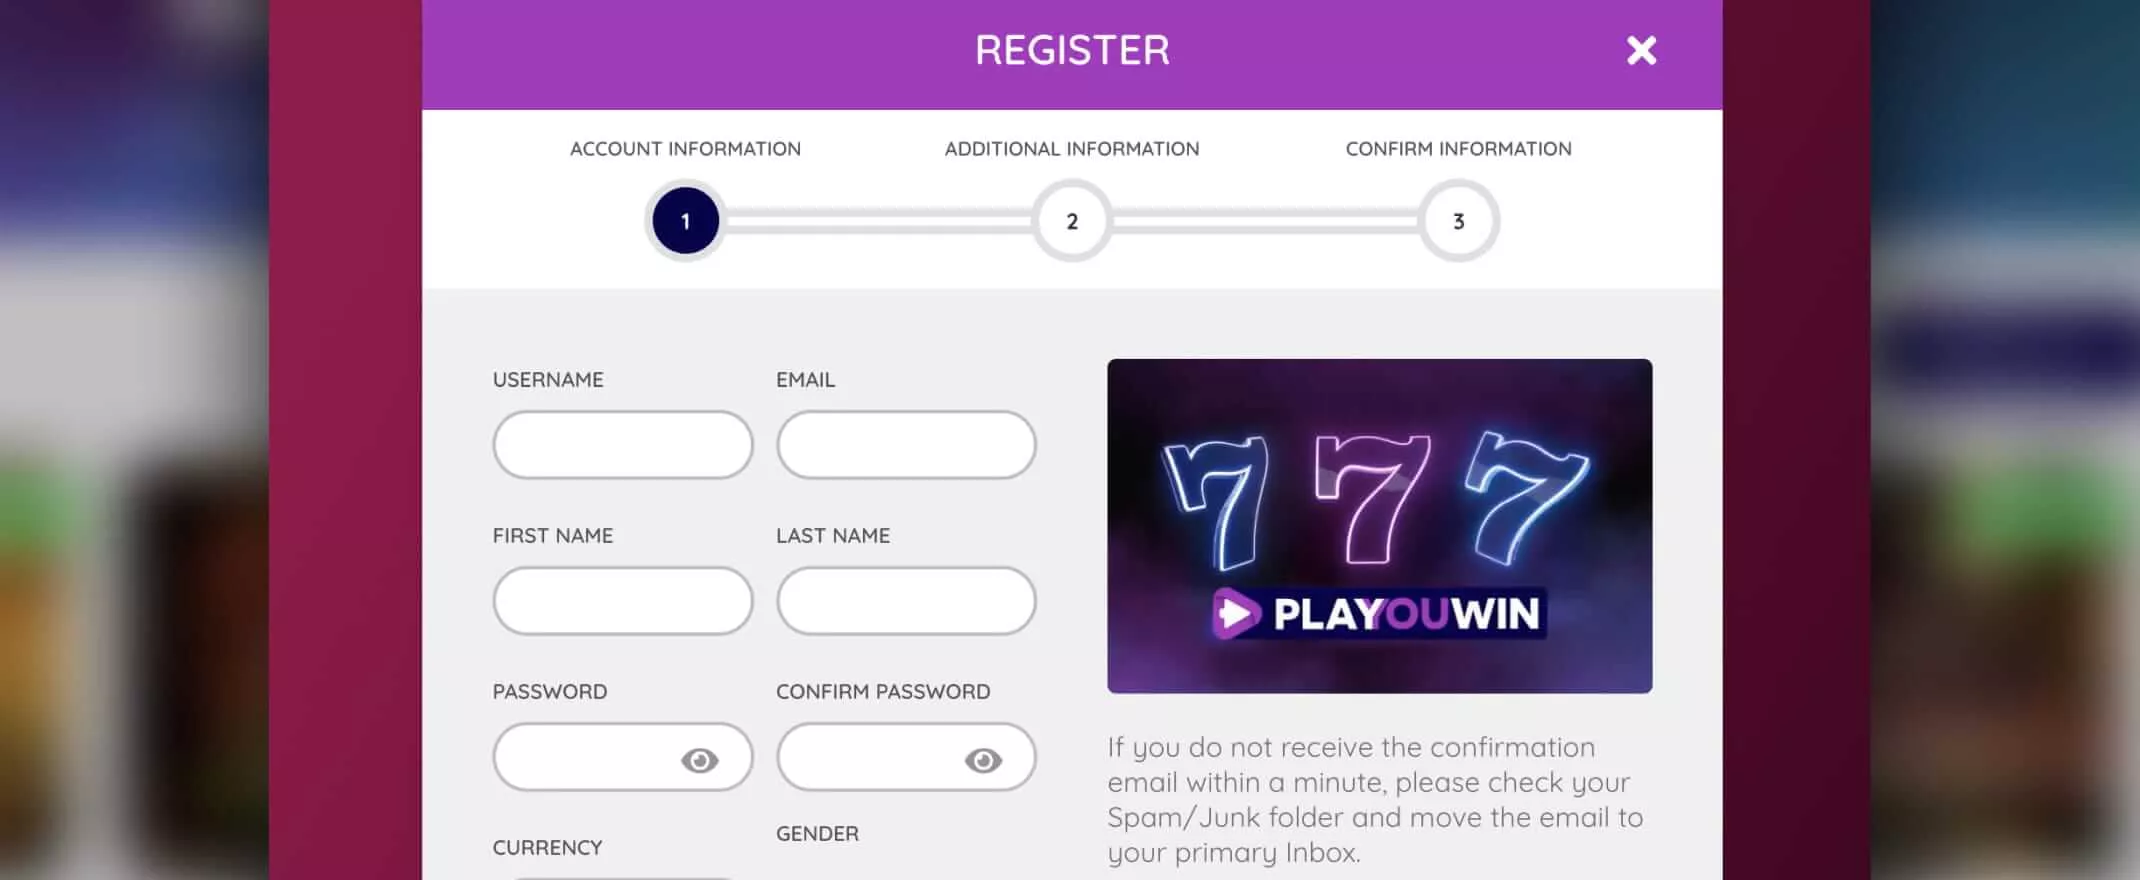 playouwin screenshot of the registration